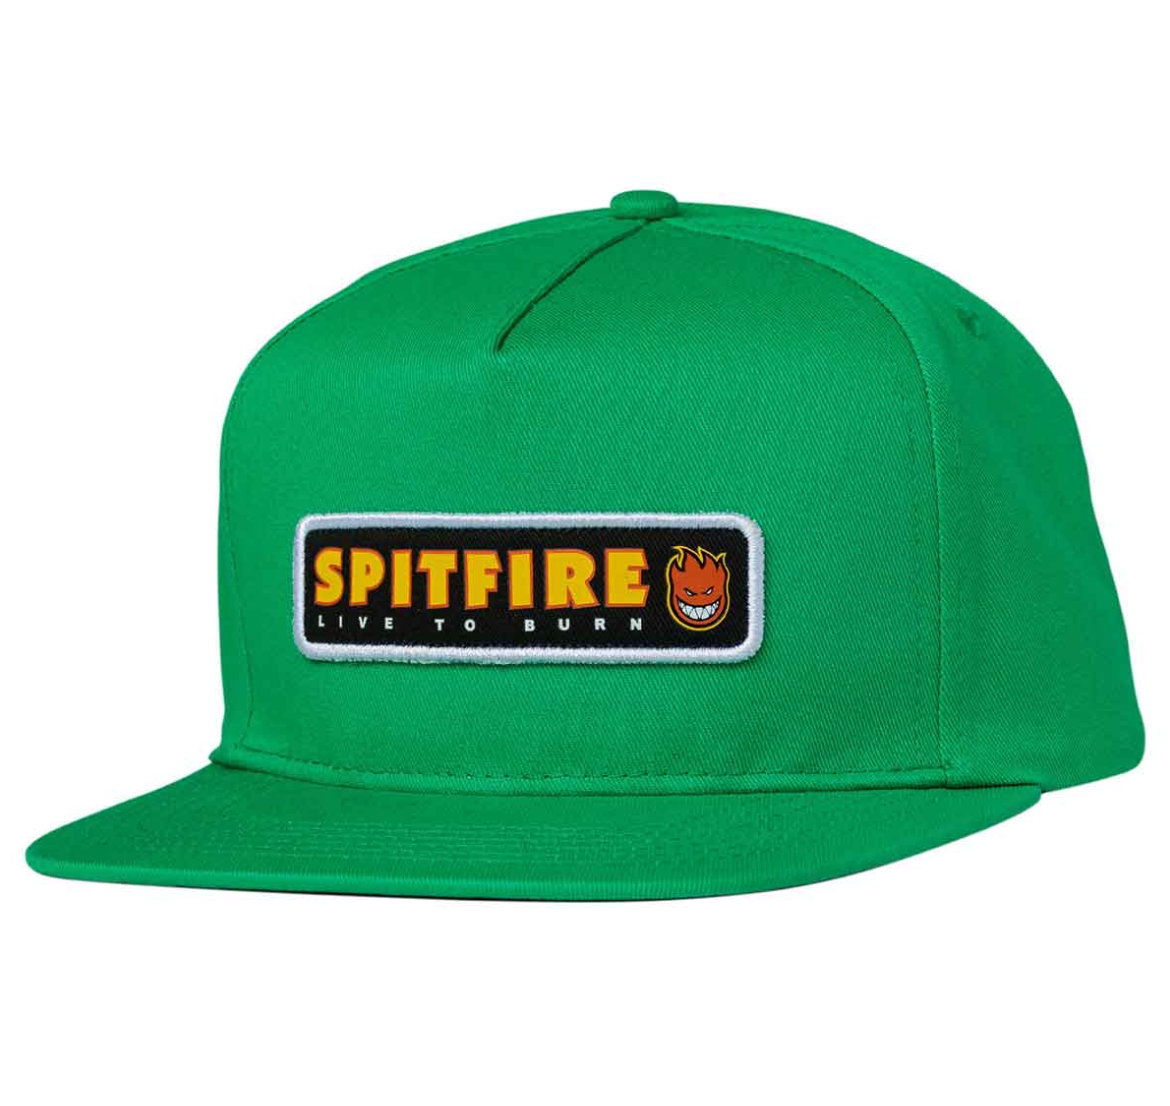 Spitfire Live To Burn Patch Adjustable Snapback Hat (Kelly Green) - Apple Valley Emporium